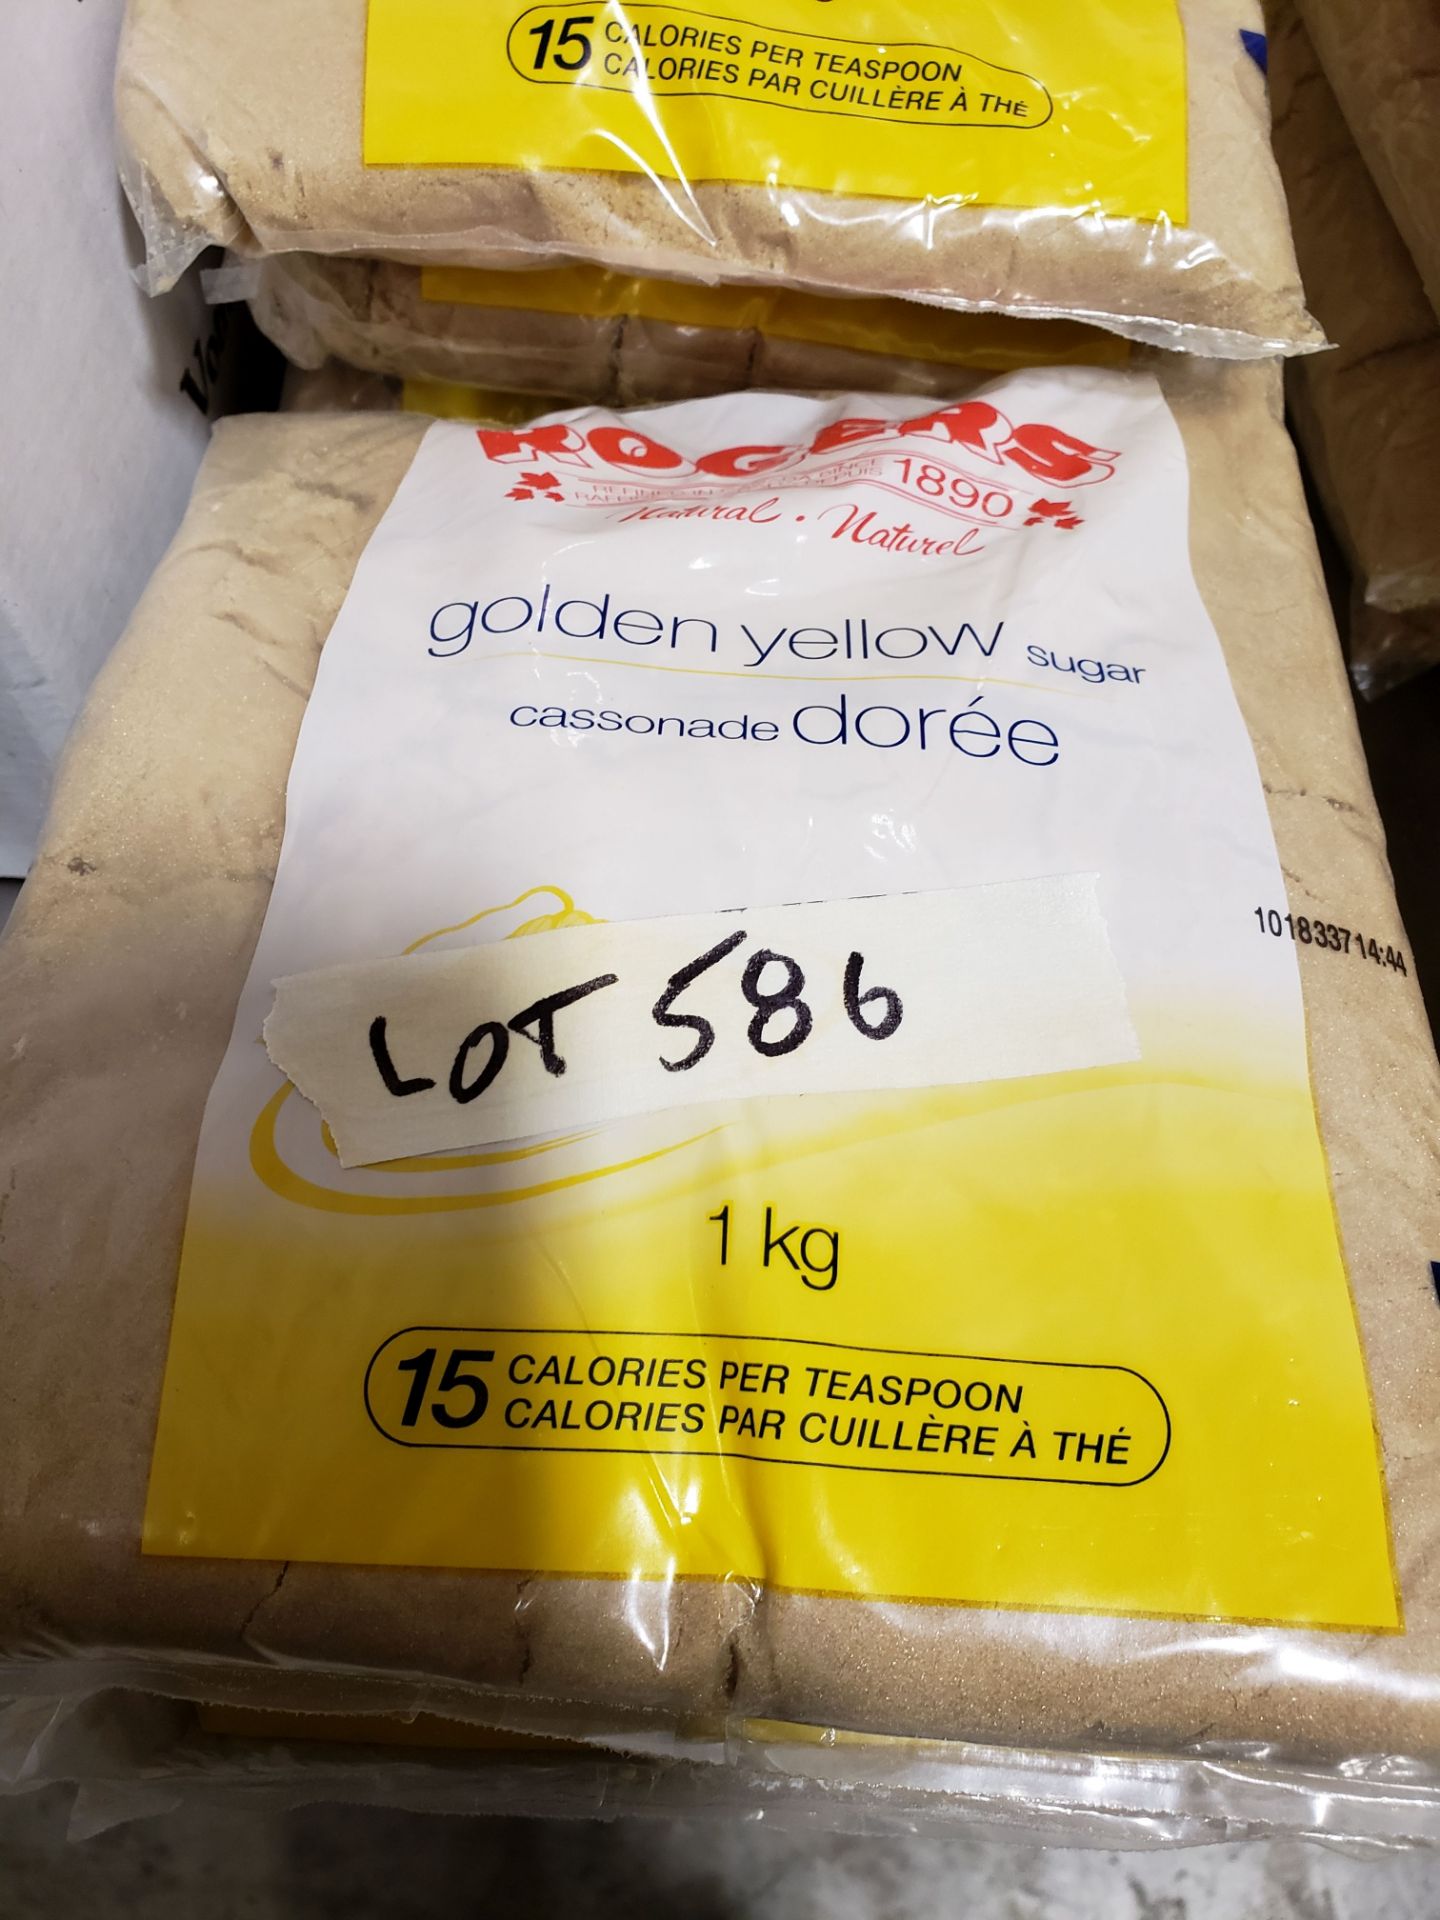 Roger's Golden Yellow Sugar - 7 x 1kg Bags